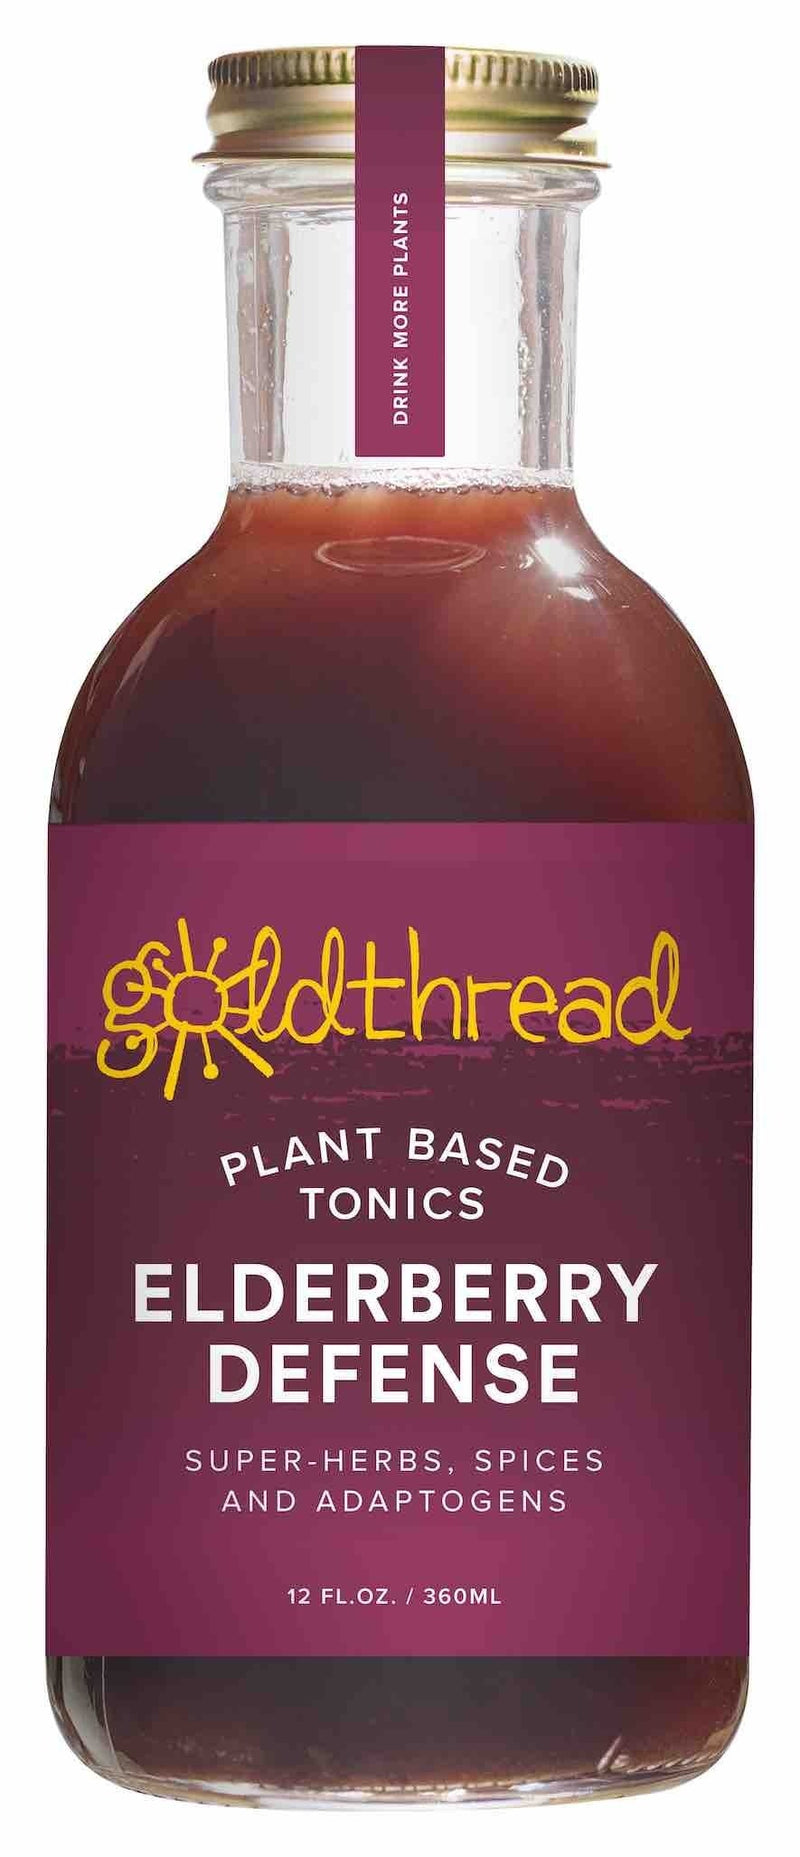 Goldthread Elderberry Defense